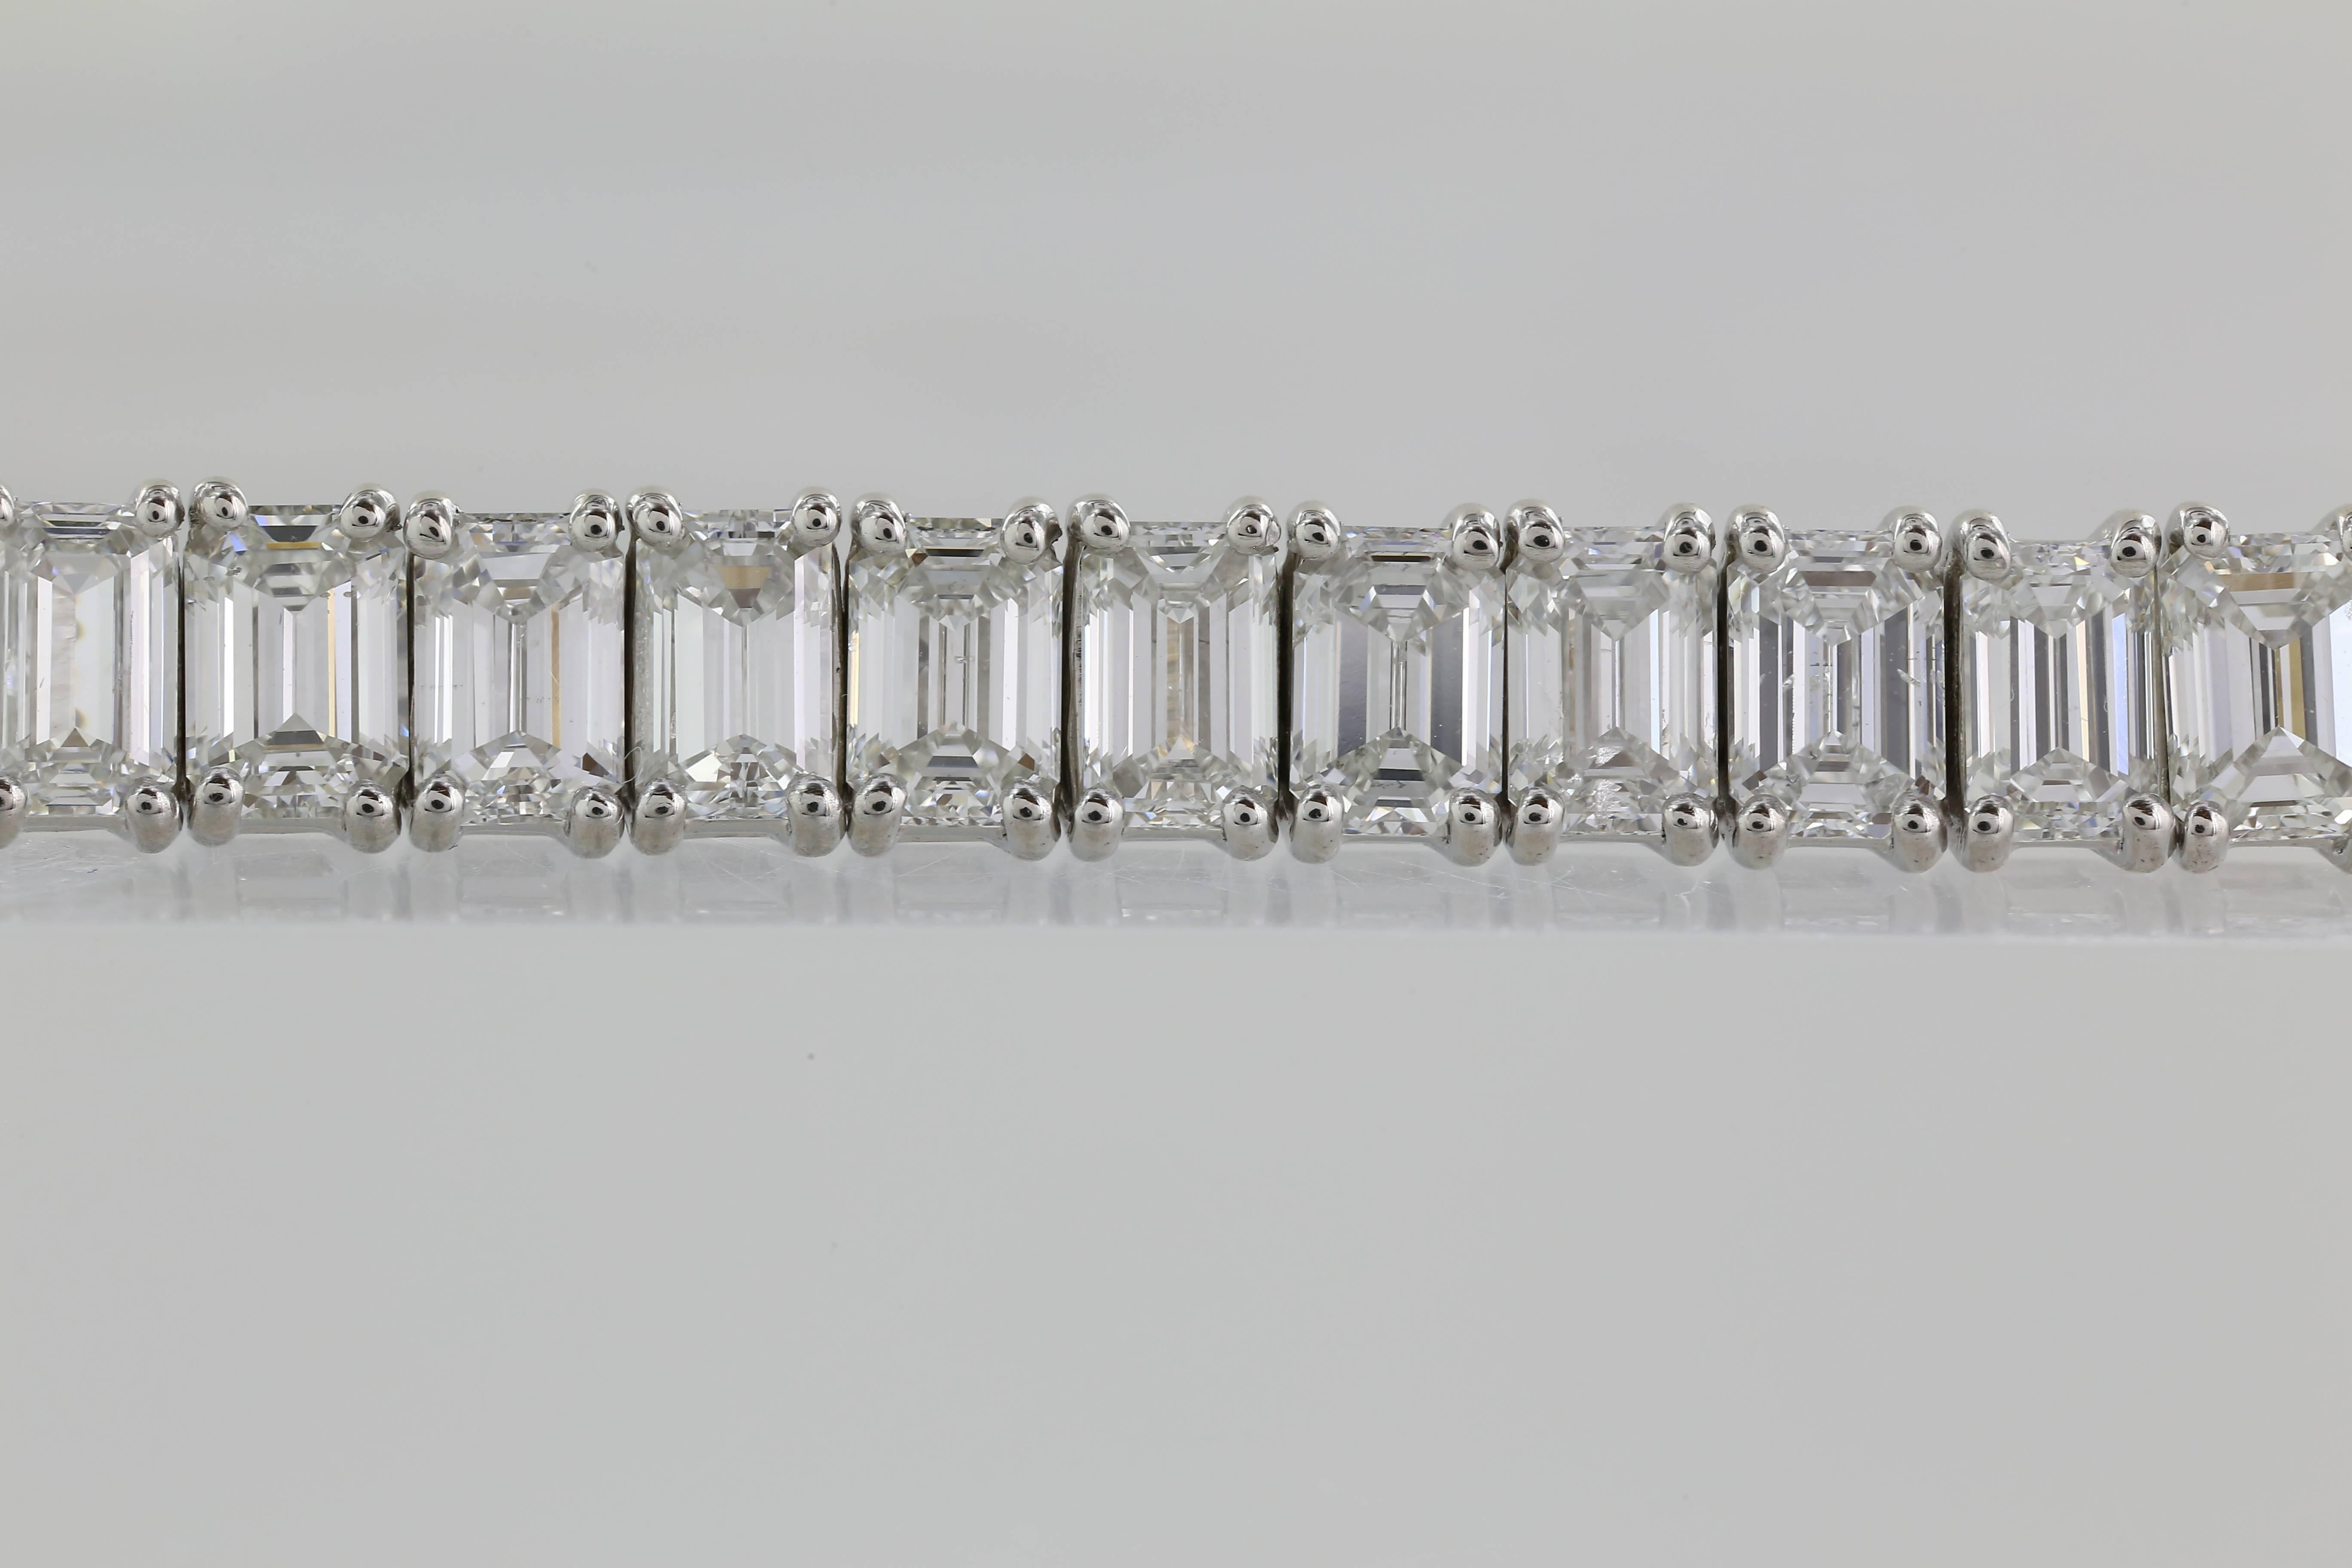 Platinum set 16.57 carat emerald cut diamond bracelet featuring 52 diamonds all with a color of E-F and a clarity of VS1-VS2